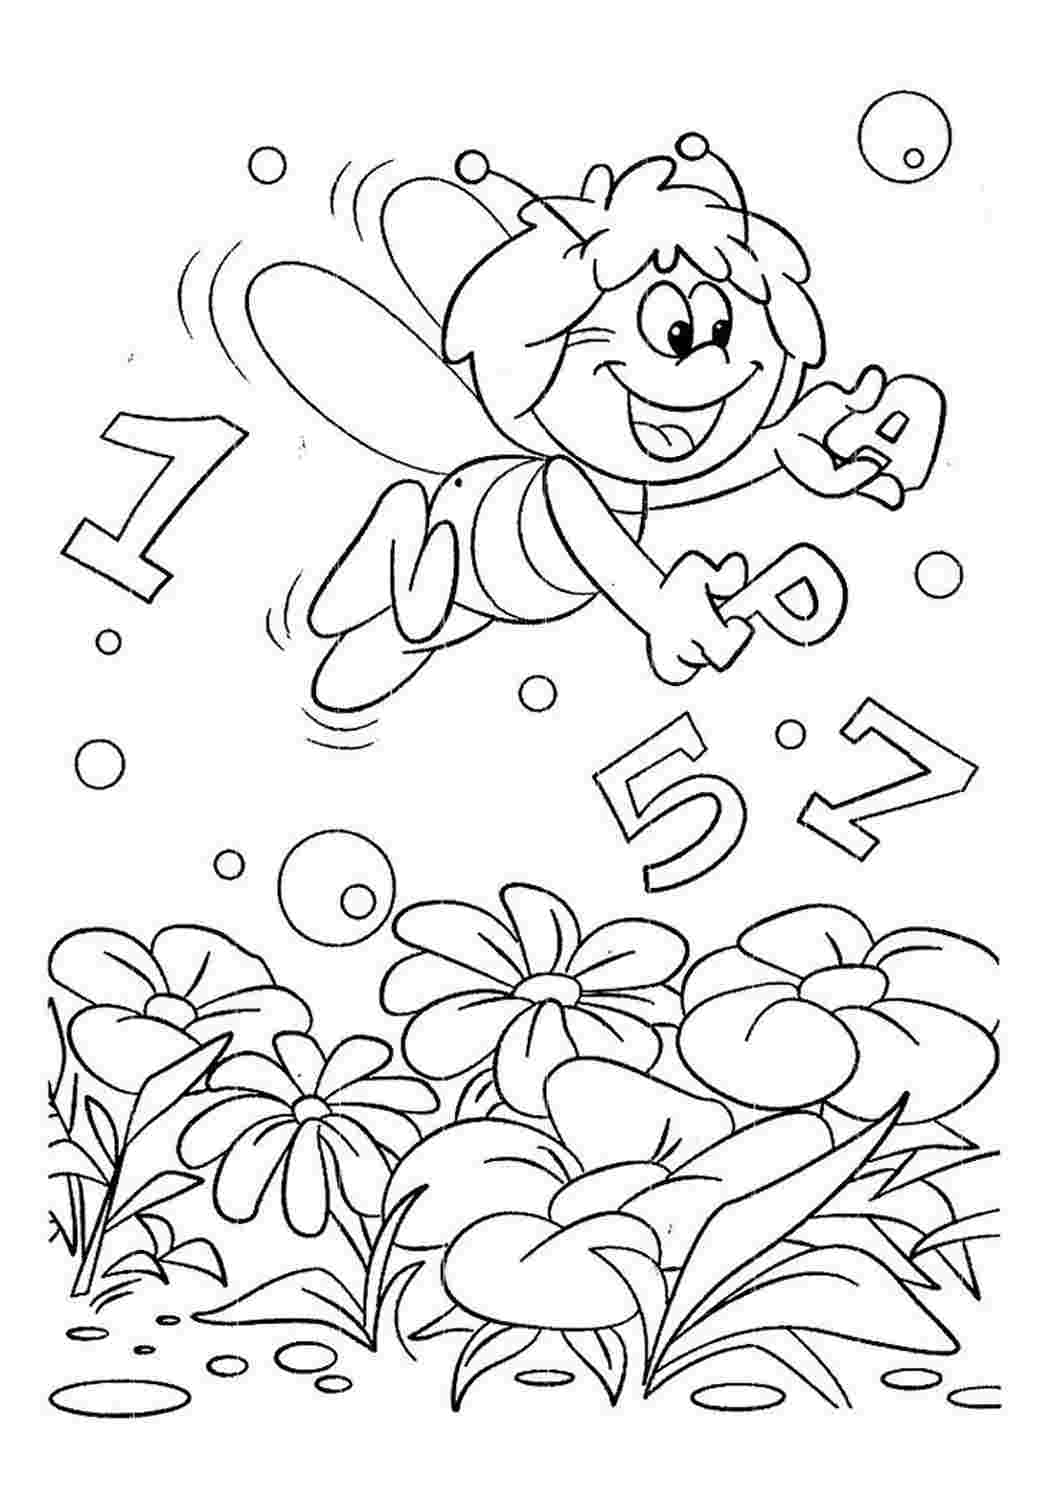 Раскраска 1 мая. Пчелка Майя раскраска. Пчела раскраска. Раскраска пчёлка для детей. Раскраска для девочек Пчелка.